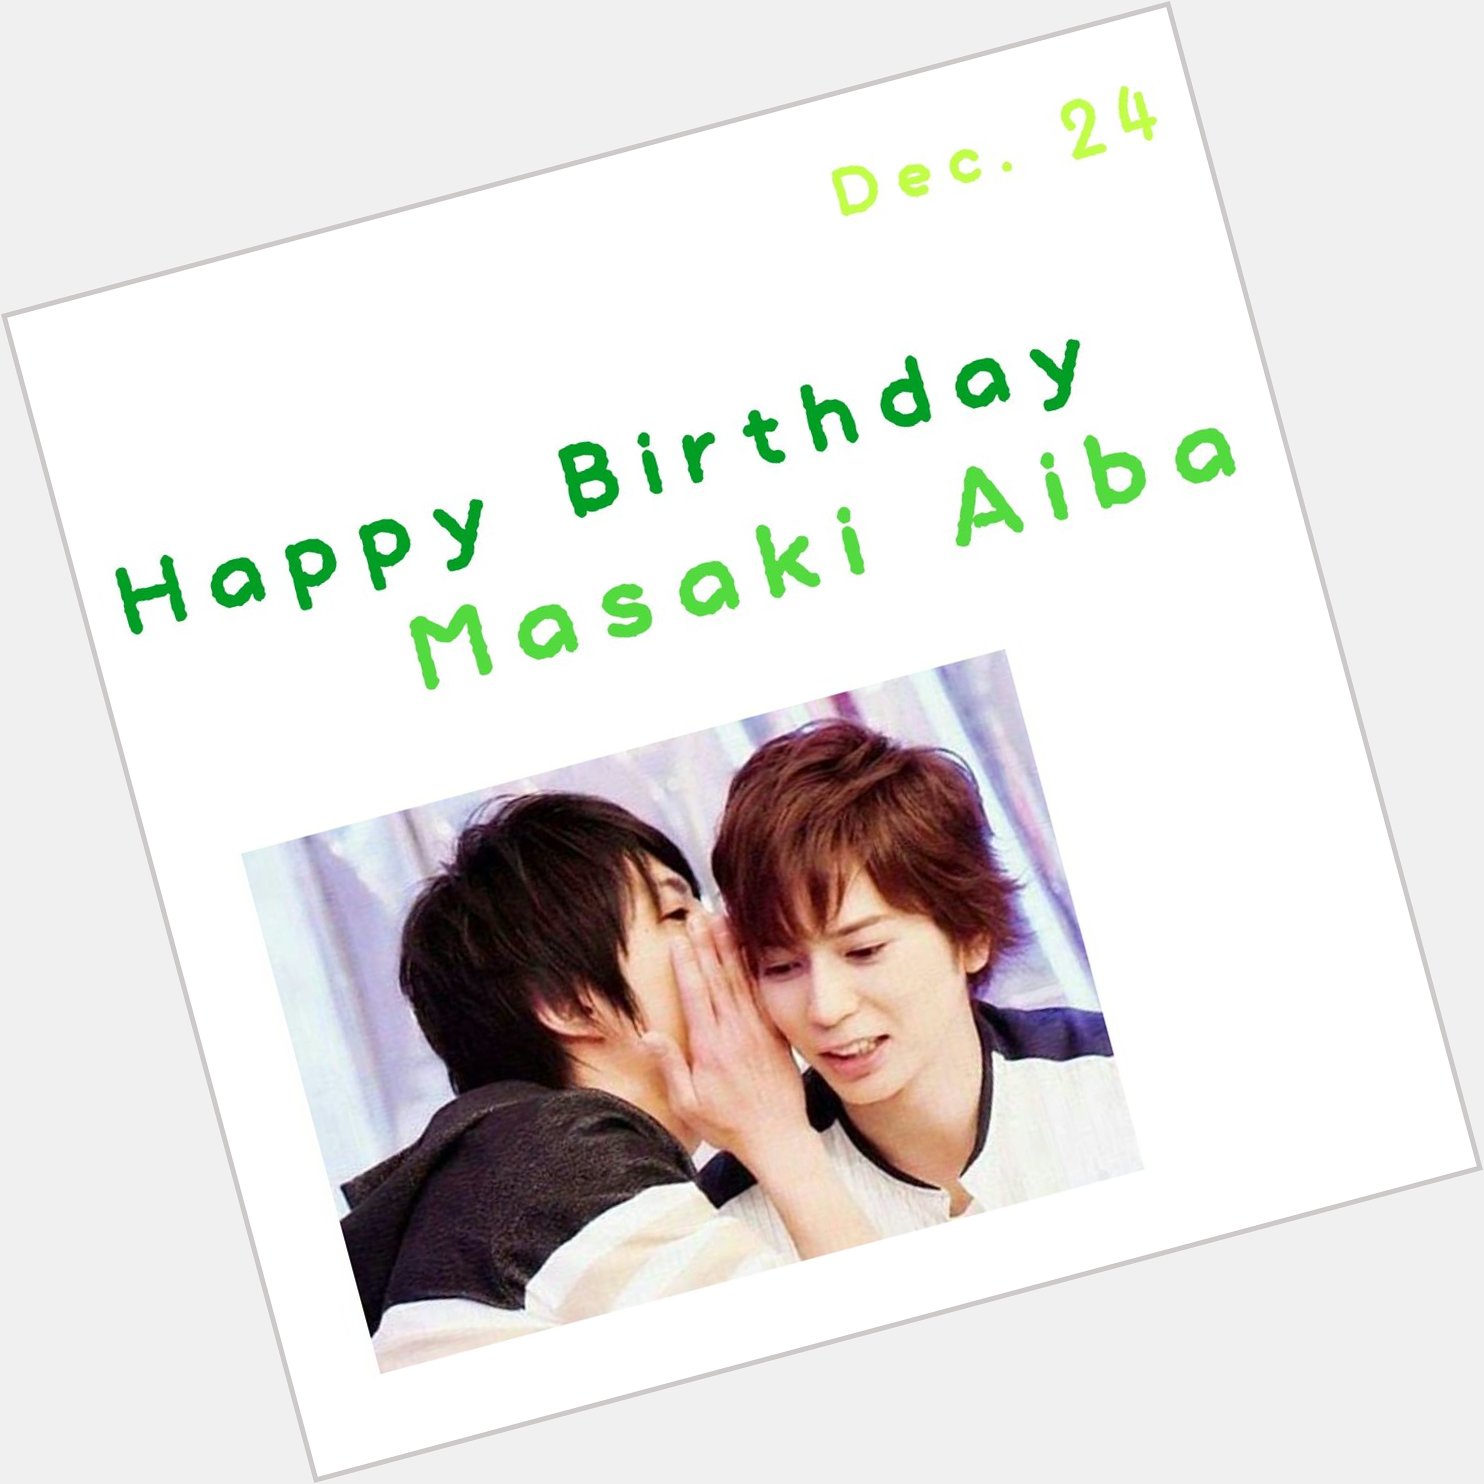 Happy Birthday  
Masaki Aiba
Your smile and gentleness are splendid
Luv U  